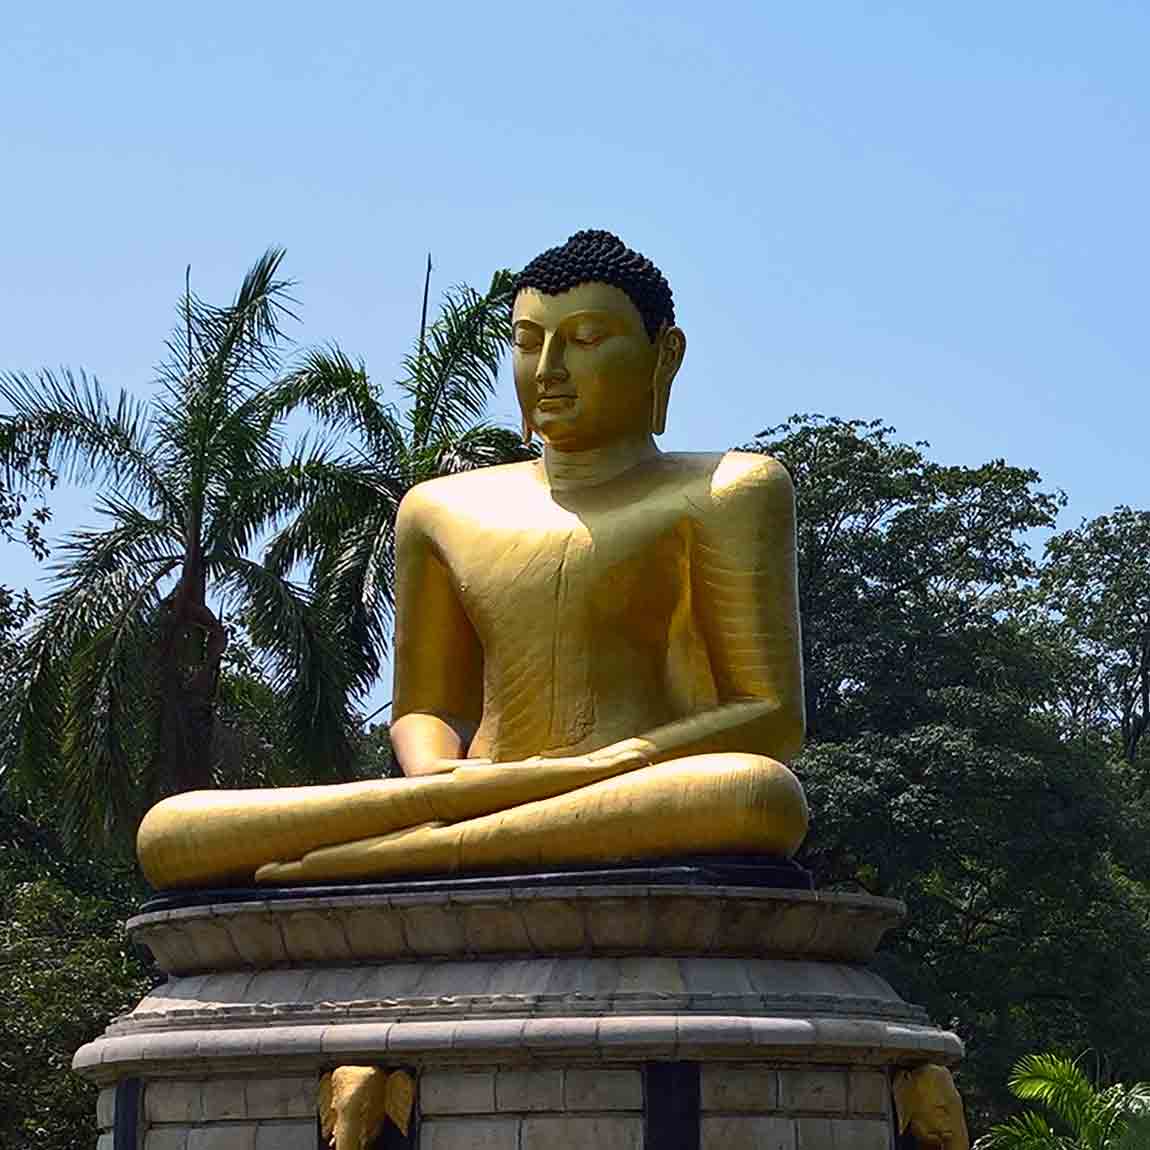 The majority of Sri Lankans are Buddhist.